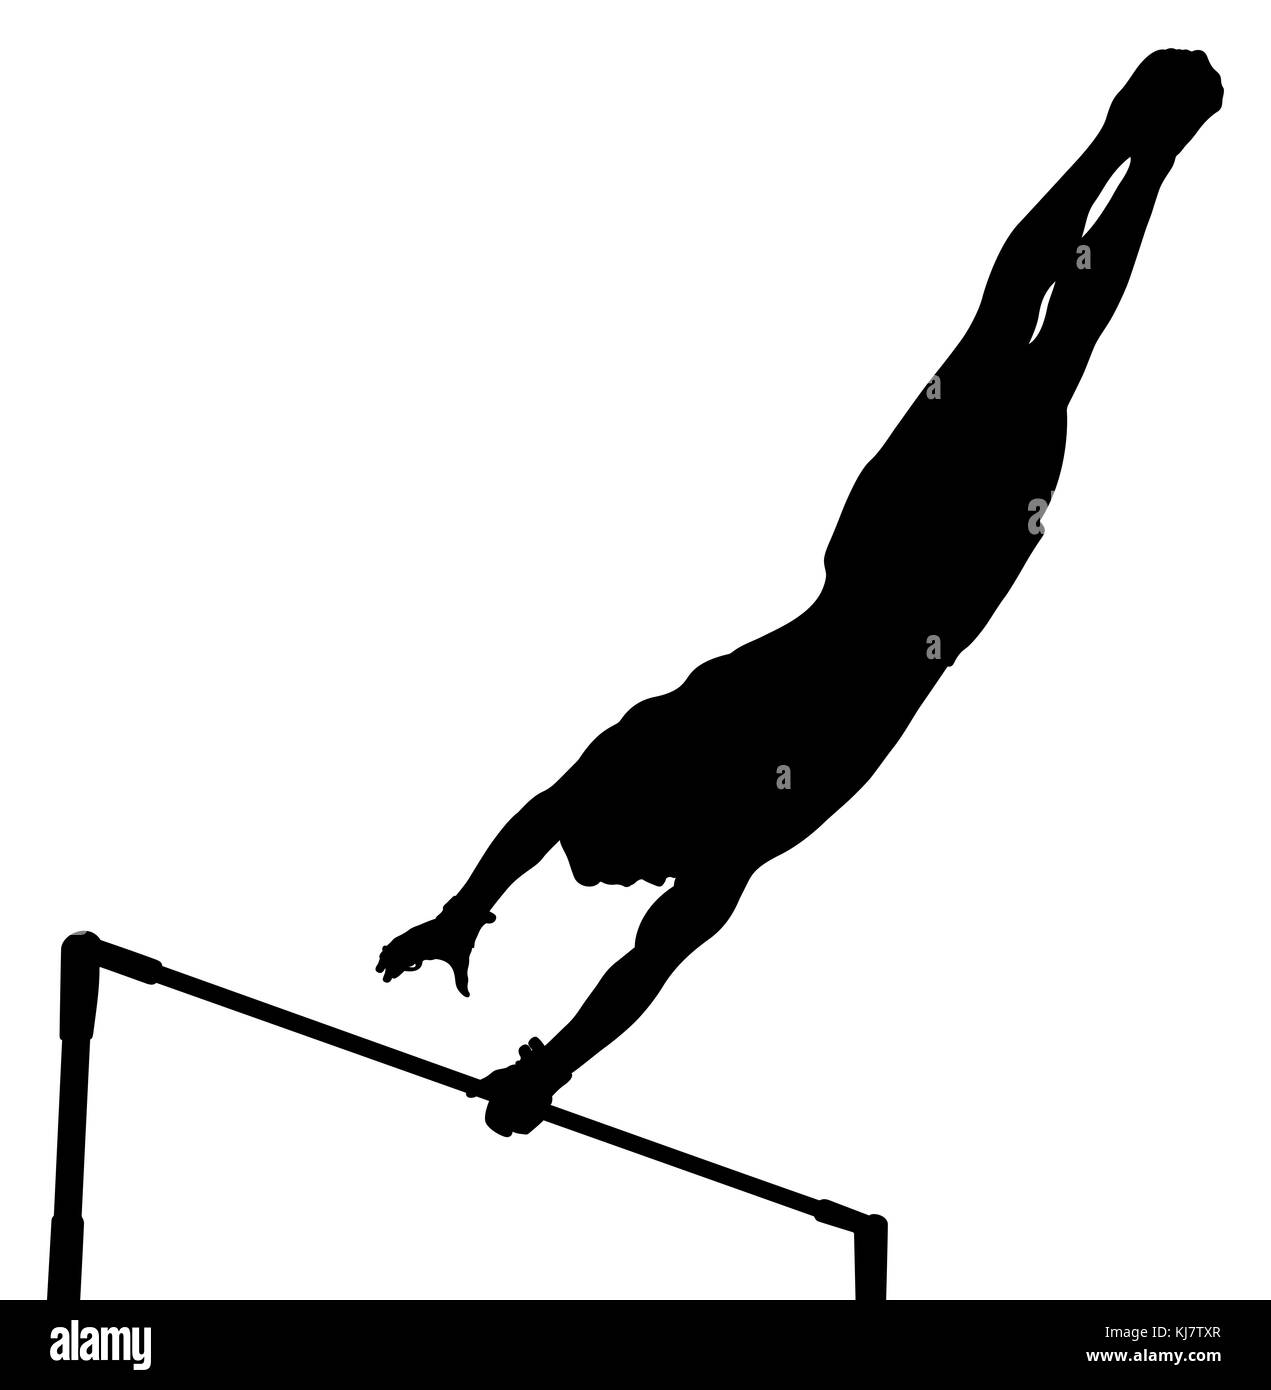 black silhouette horizontal bar man gymnast in artistic gymnastics